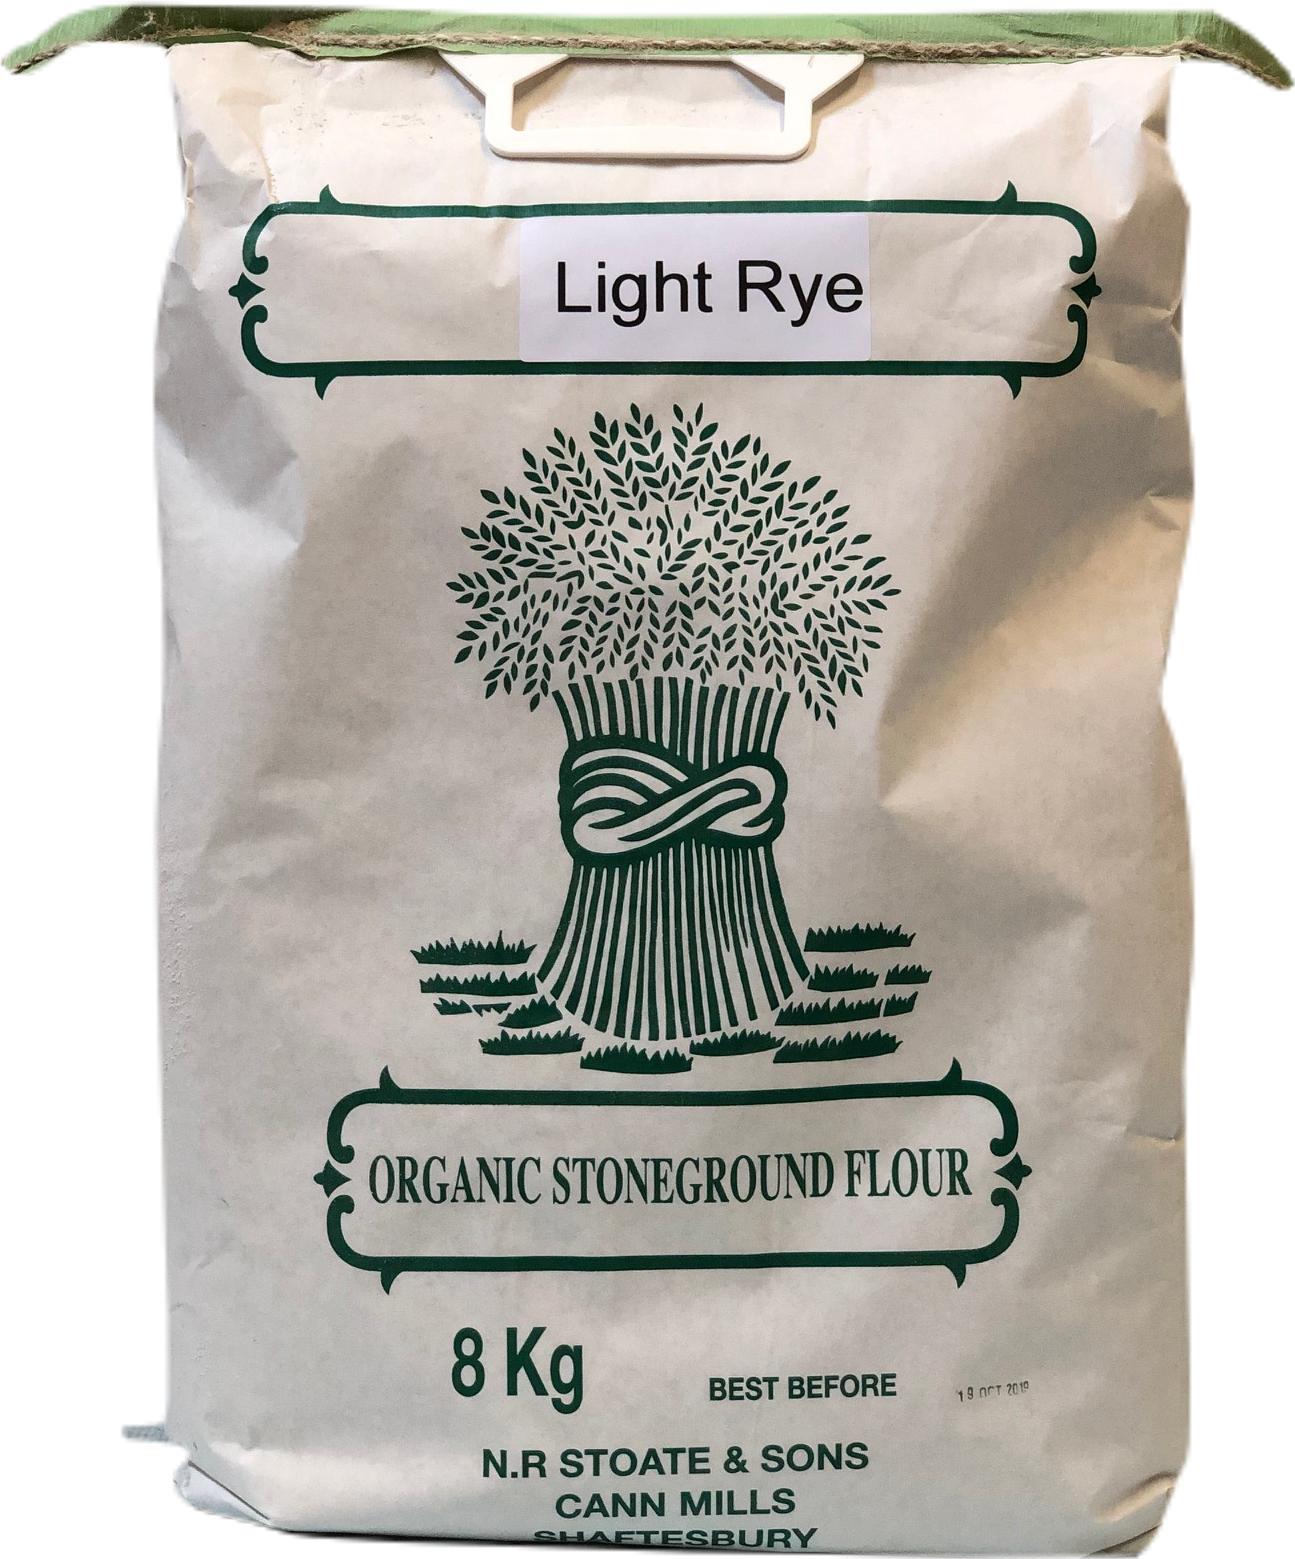 Organic Stoneground Light Rye Flour 8kg